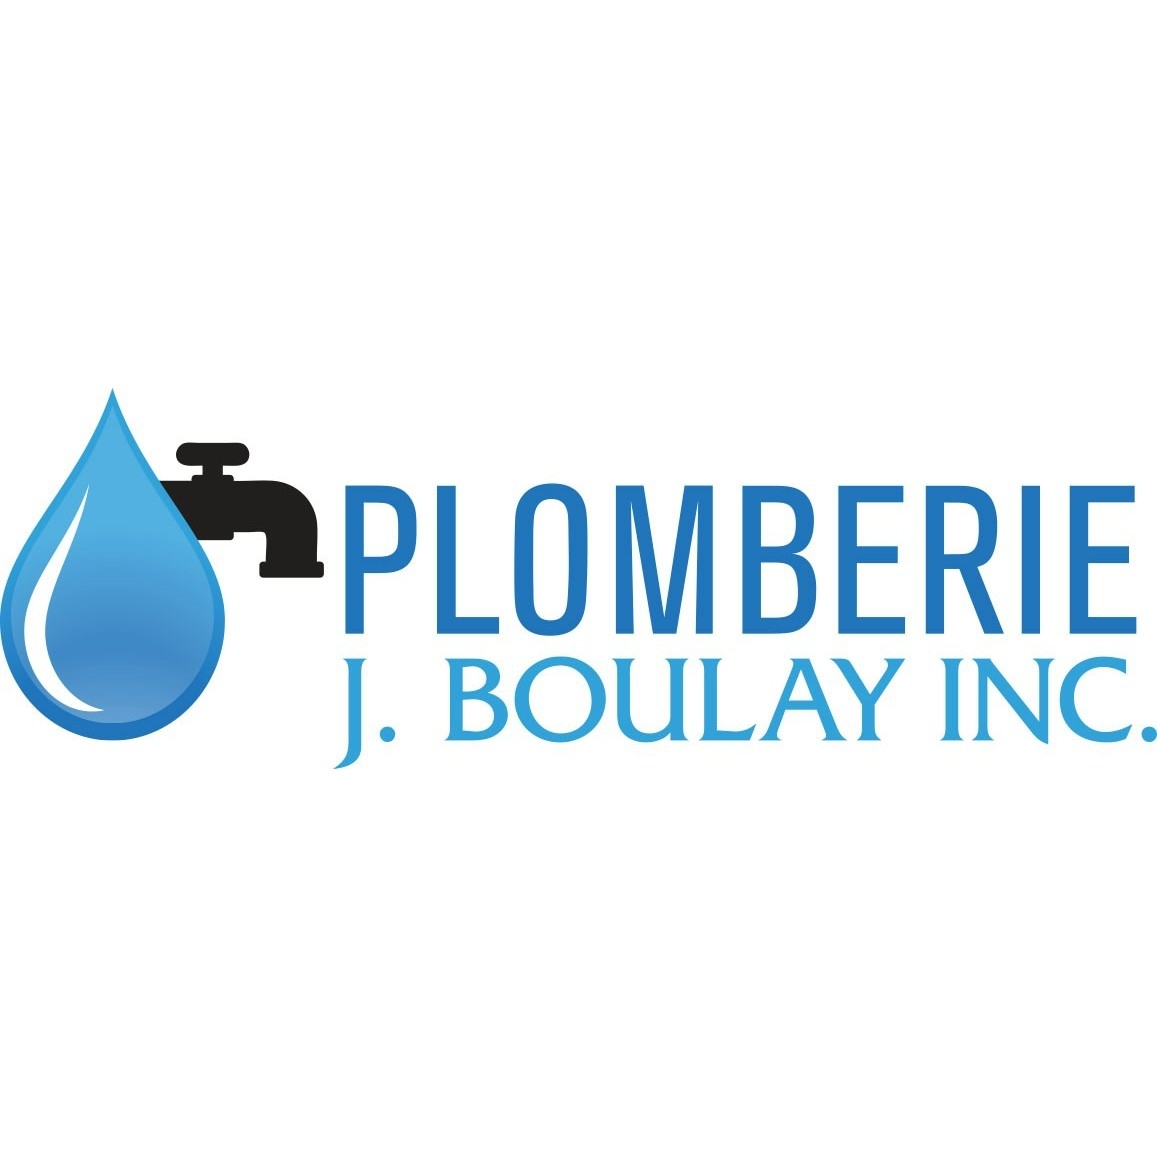 Plomberie J. Boulay inc. - Plumbers & Plumbing Contractors